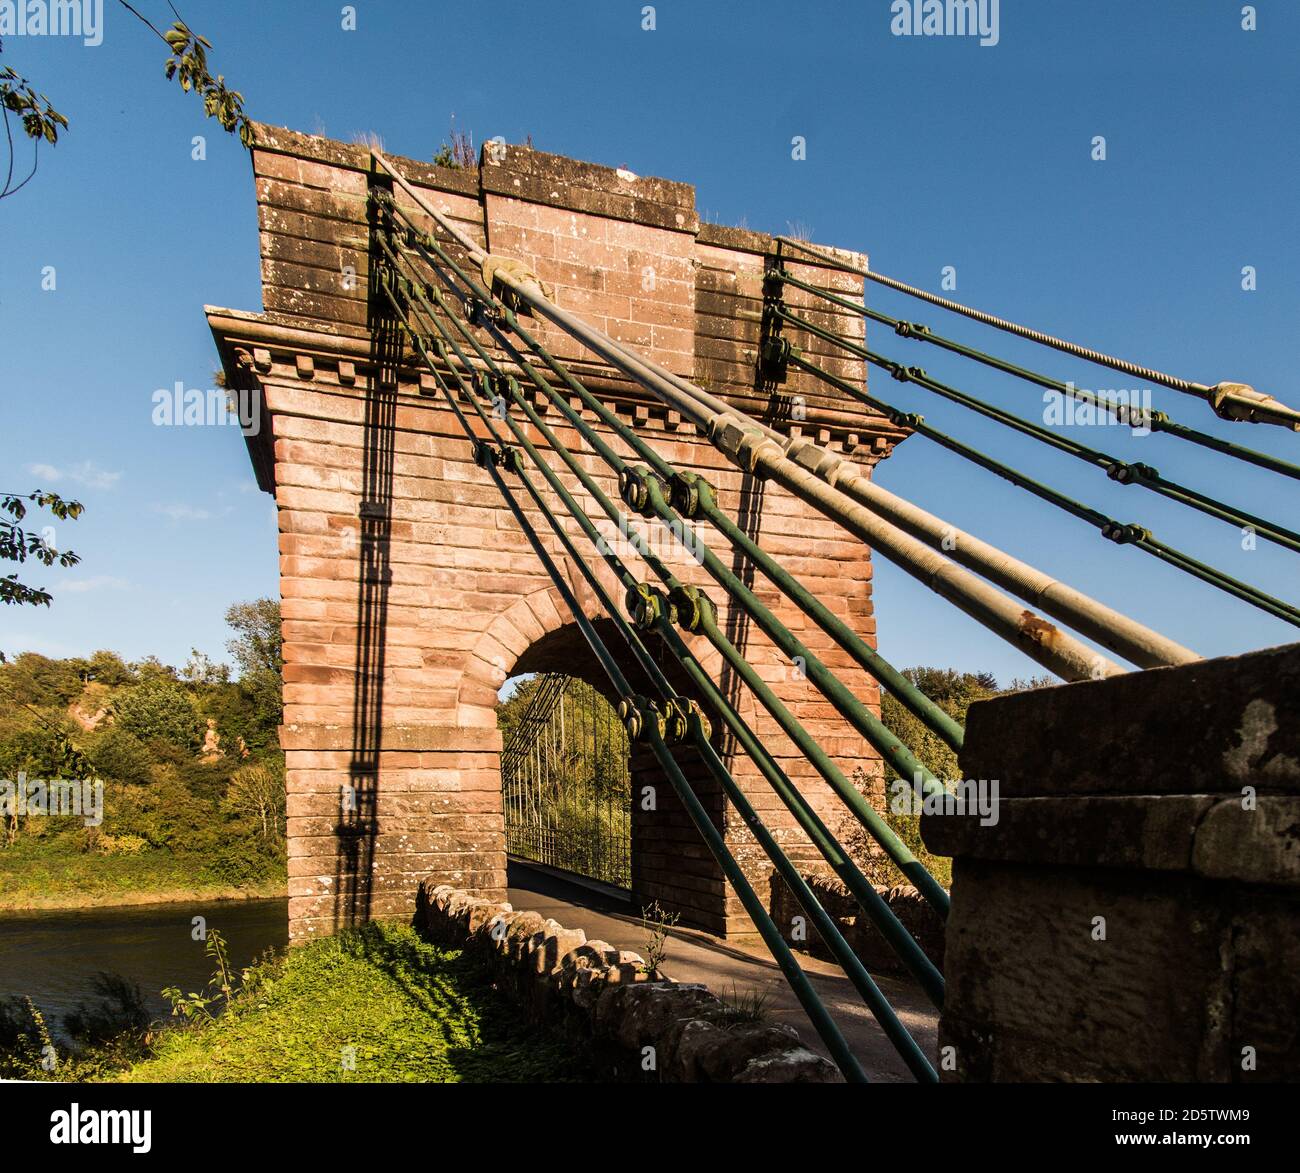 Union Bridge, a 200 year old chain bridge, spans the River Tweed, bridges the borders of England and Scotland. Stock Photo